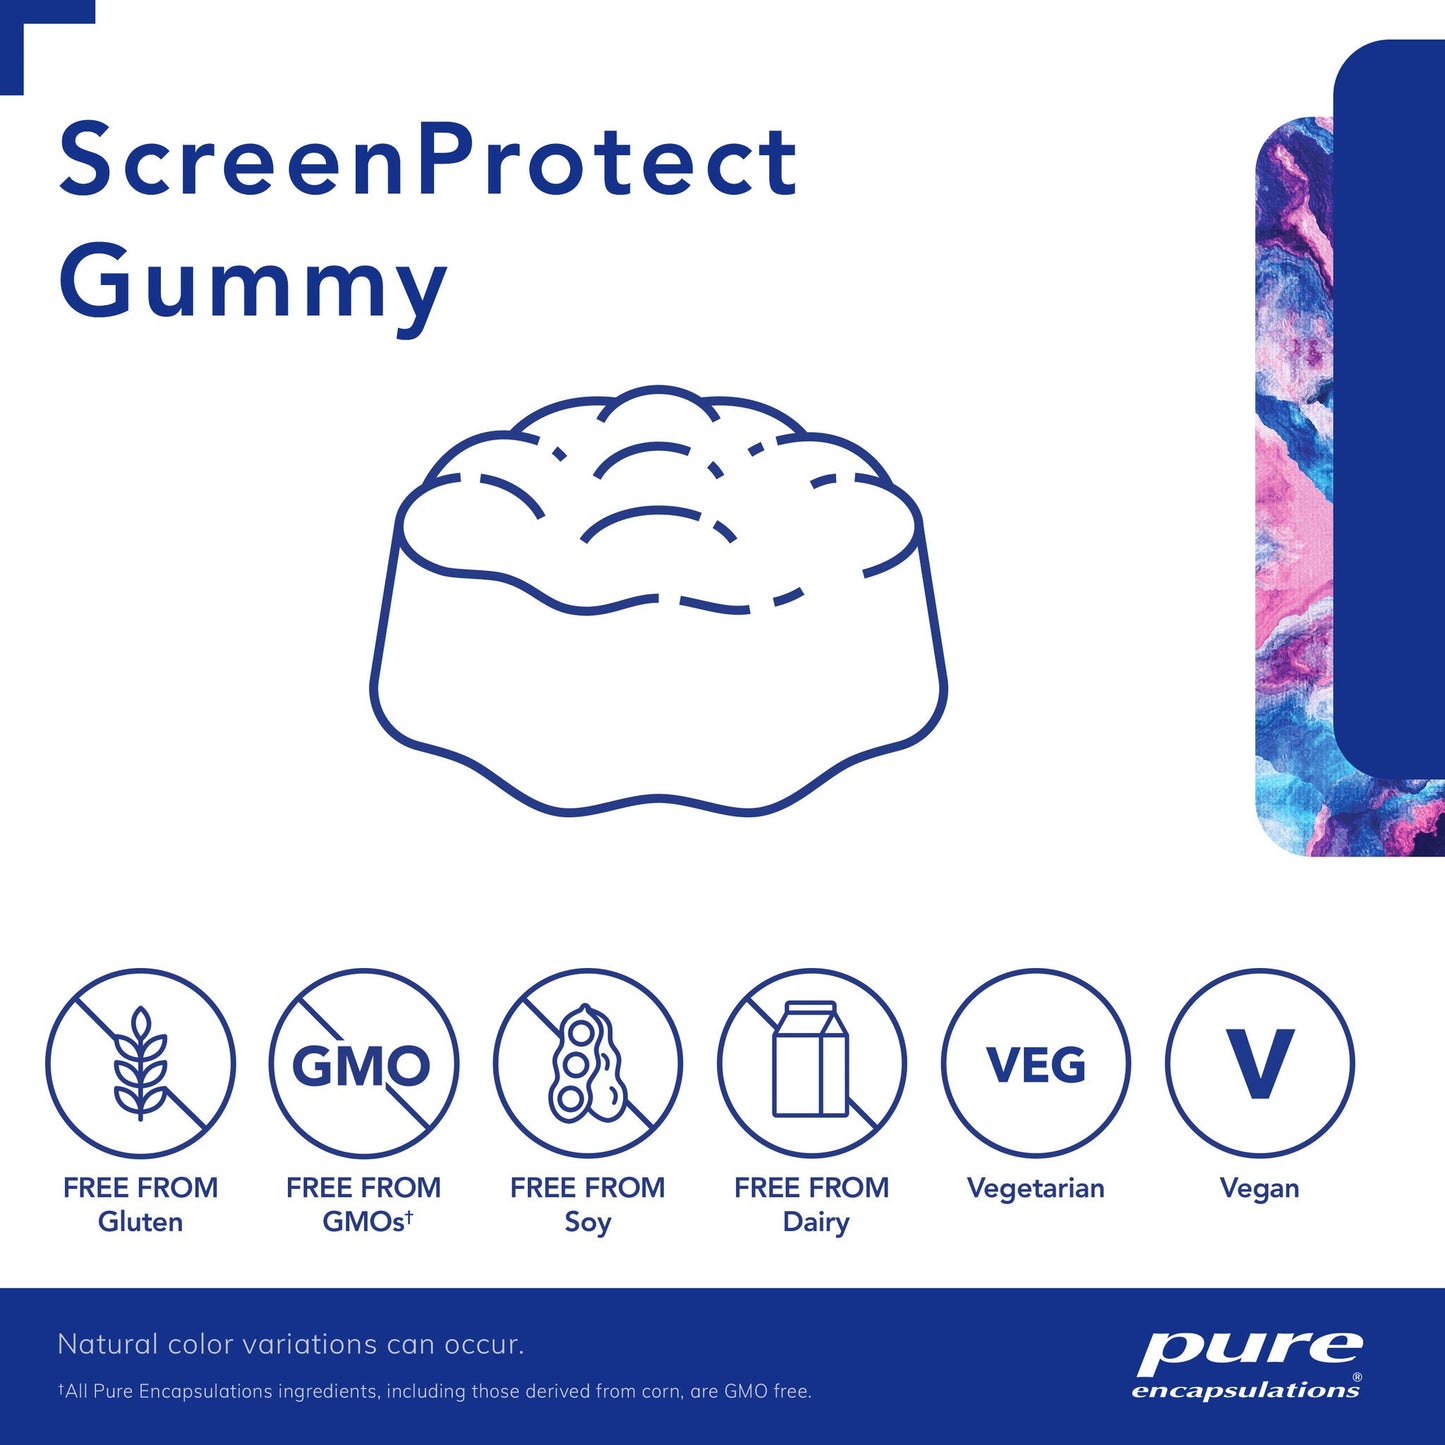 ScreenProtect Gummy